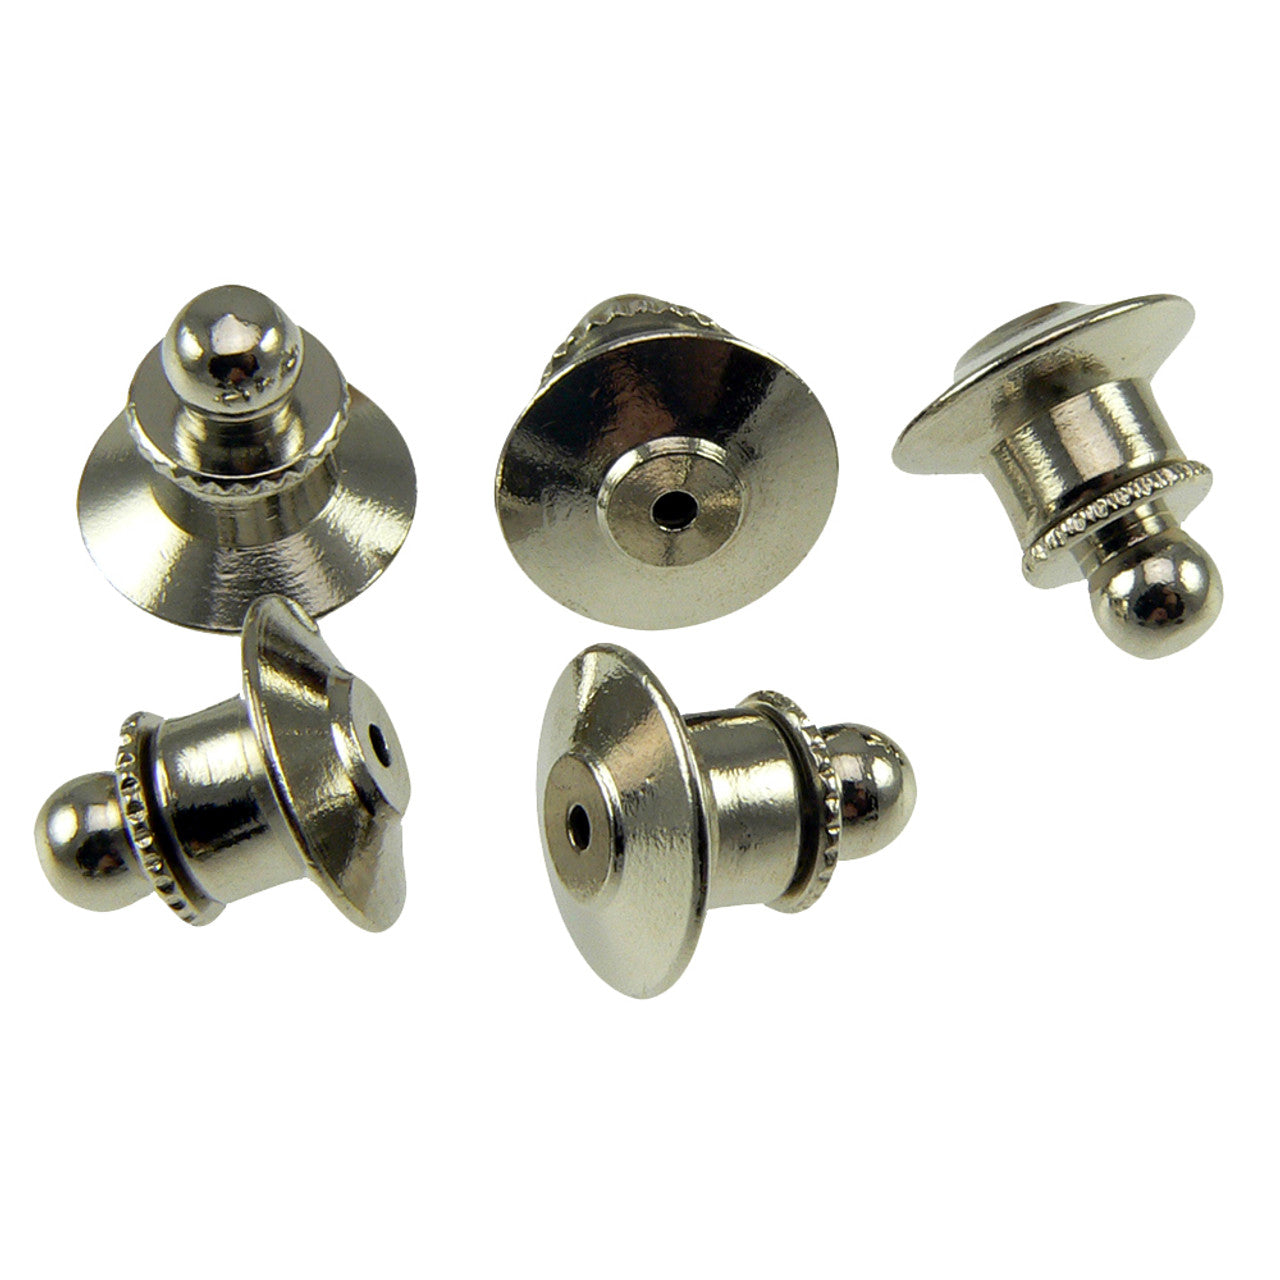 2 Locking Clutch Pin Backings